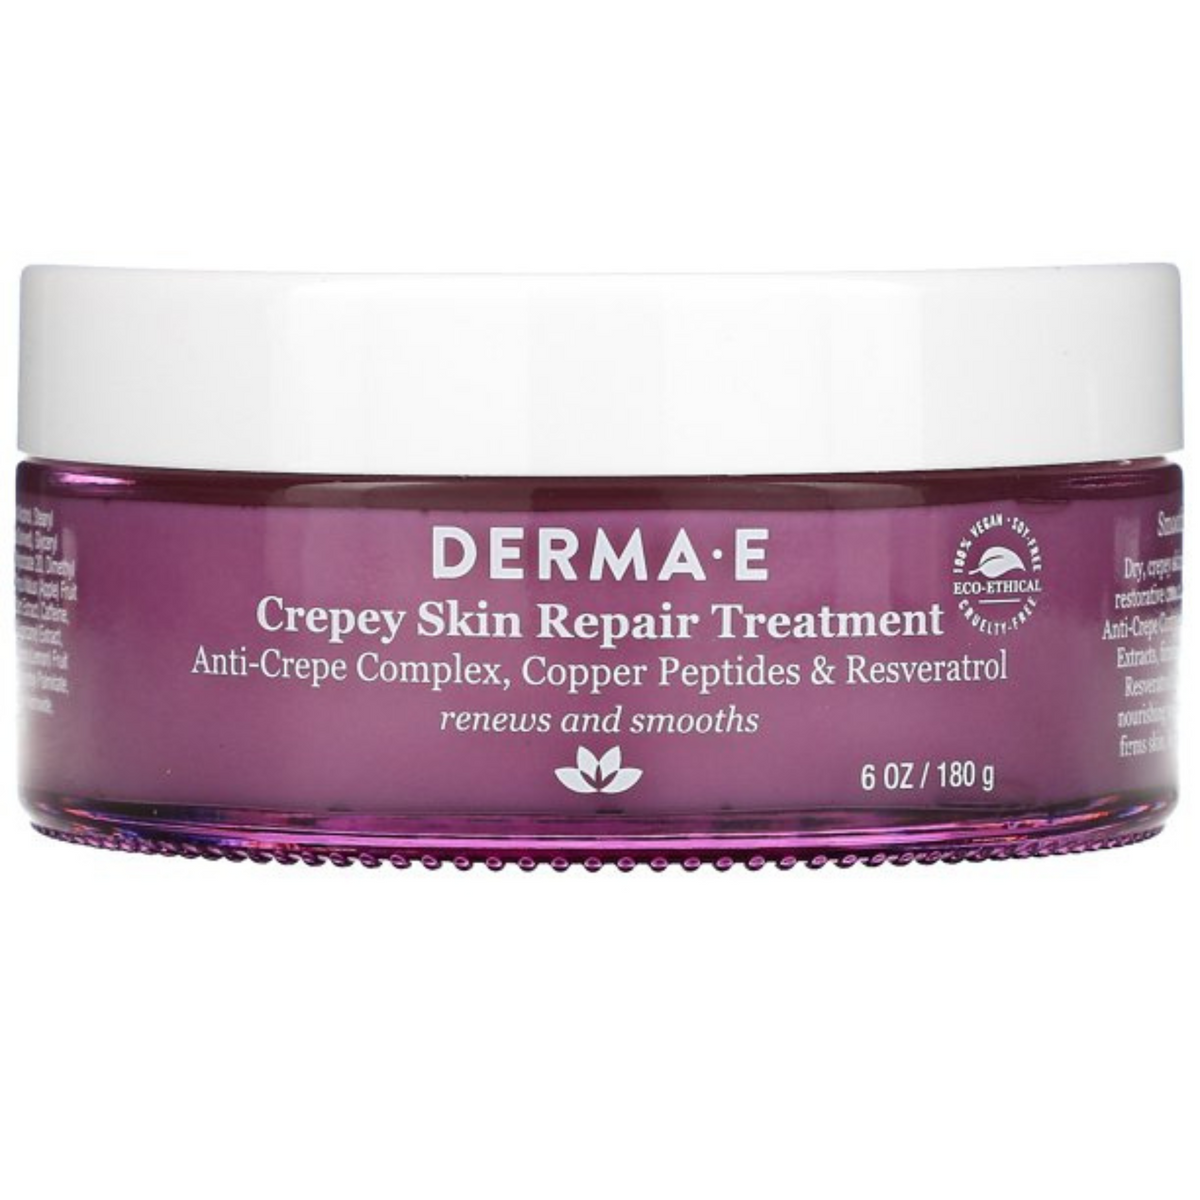 Primary Image of DERMA E Crepey Skin Repair Treatment (6 oz)